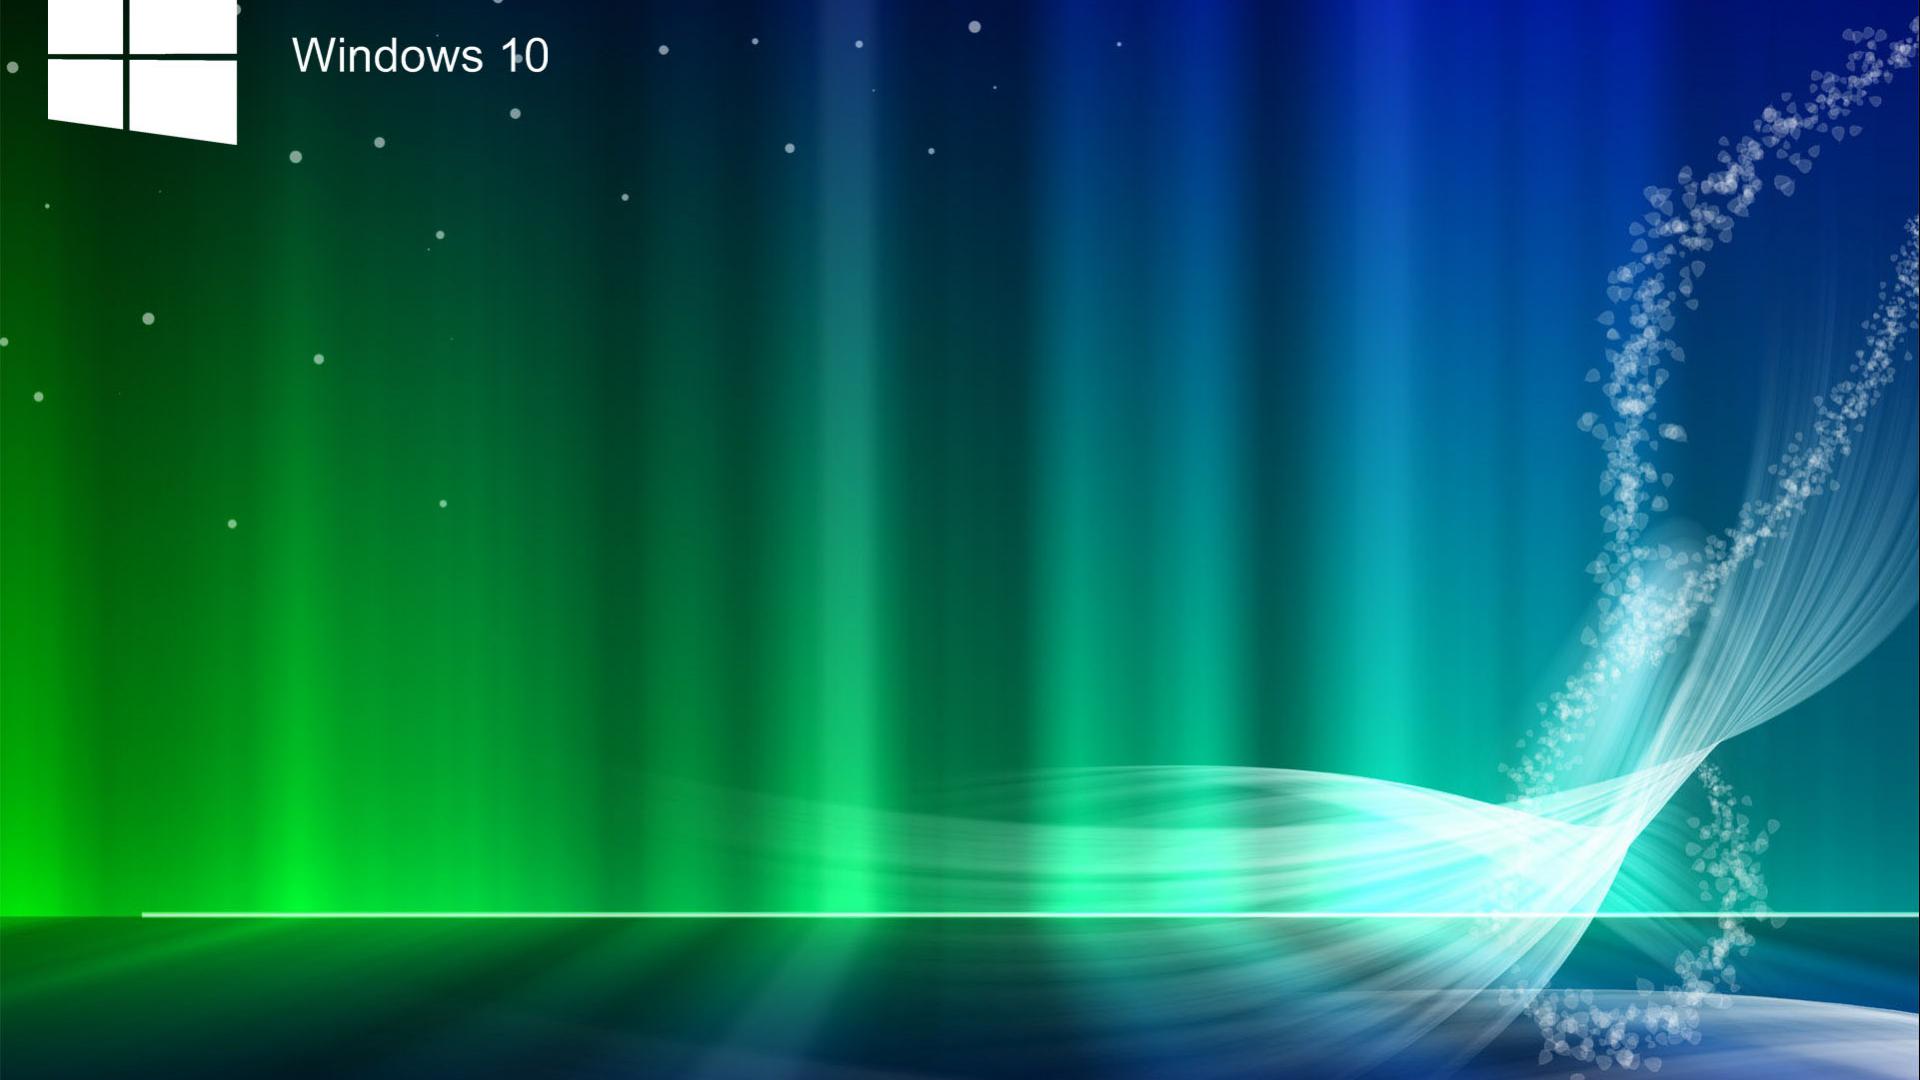 Windows 10 Wallpaper 1080p Full HD Abstract with Logo   HD Desktop